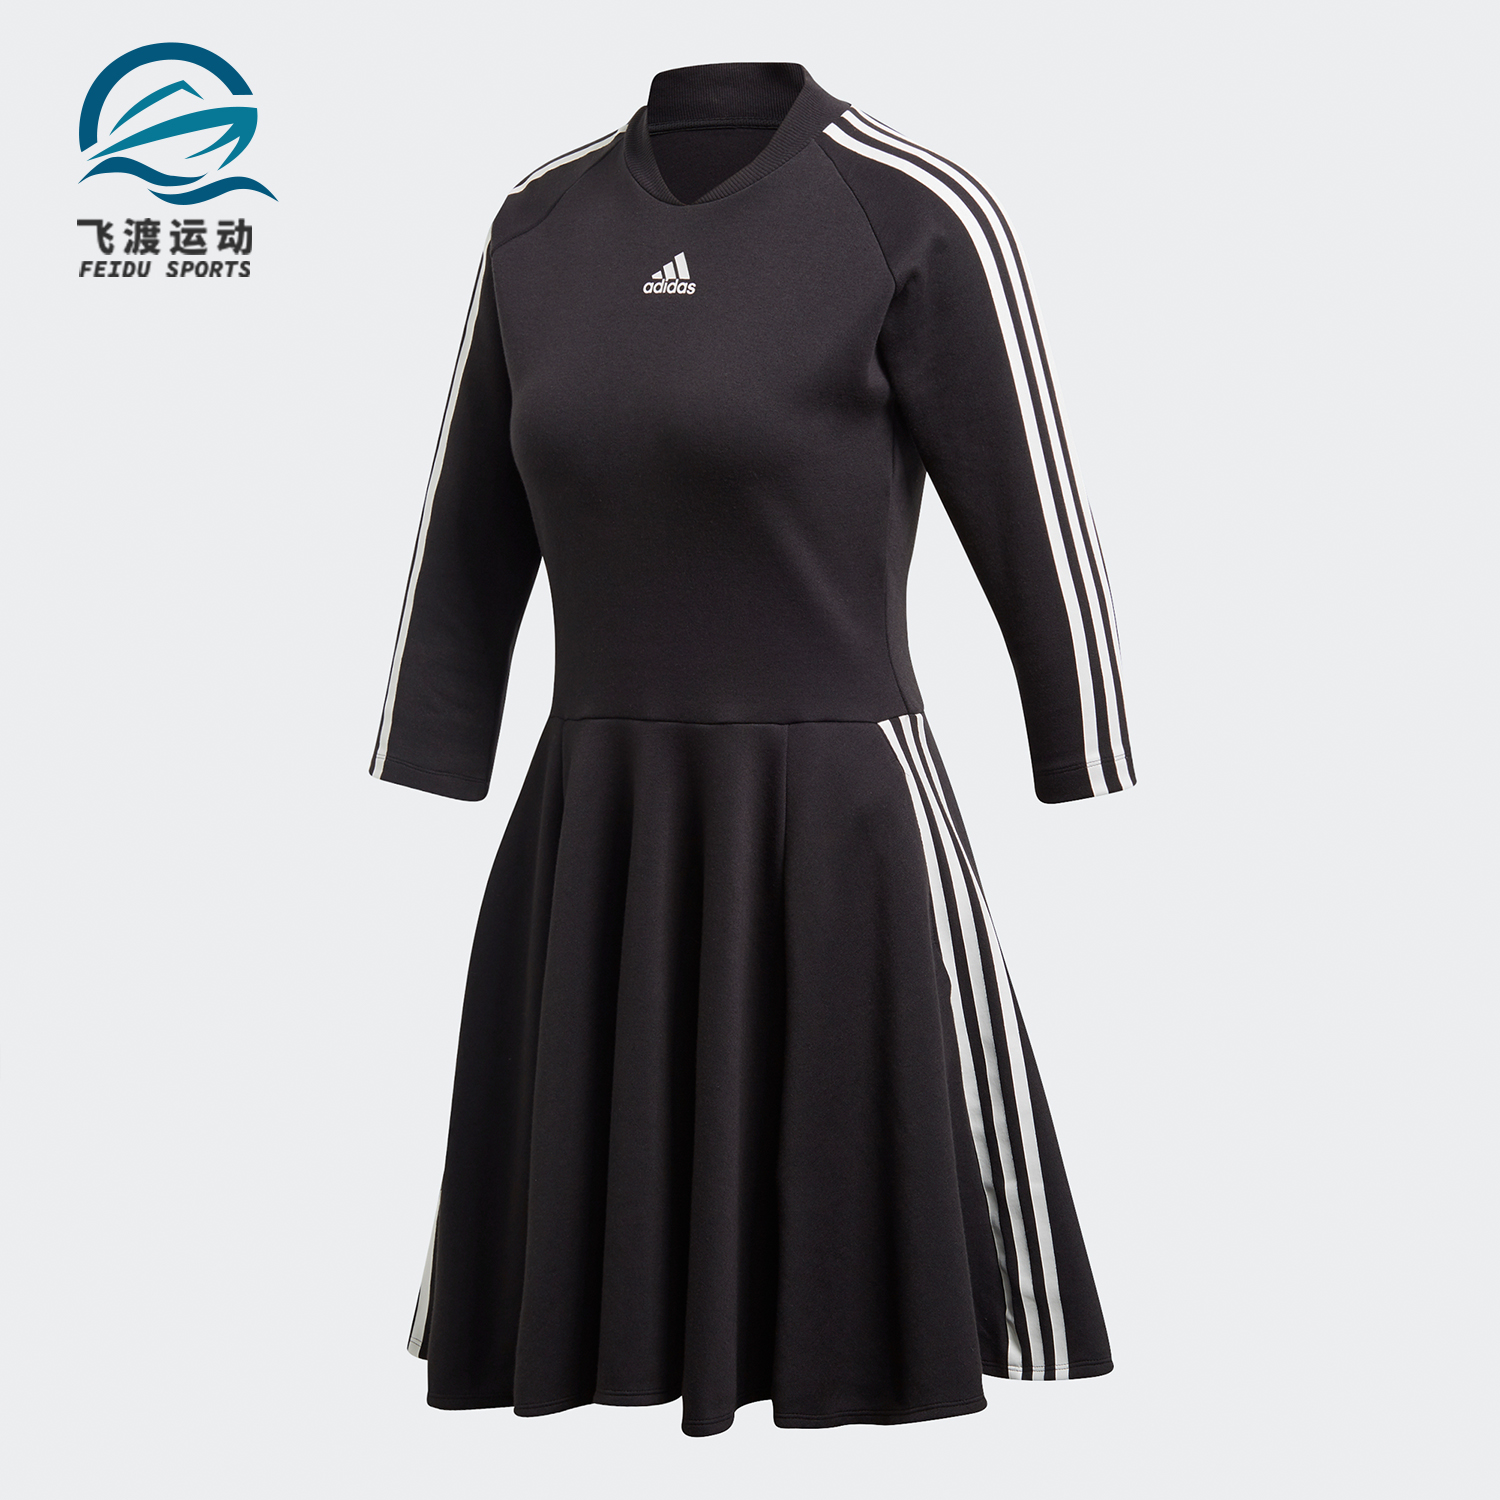 FL6901 春季 新款 女子运动型格连衣裙 阿迪达斯正品 Adidas